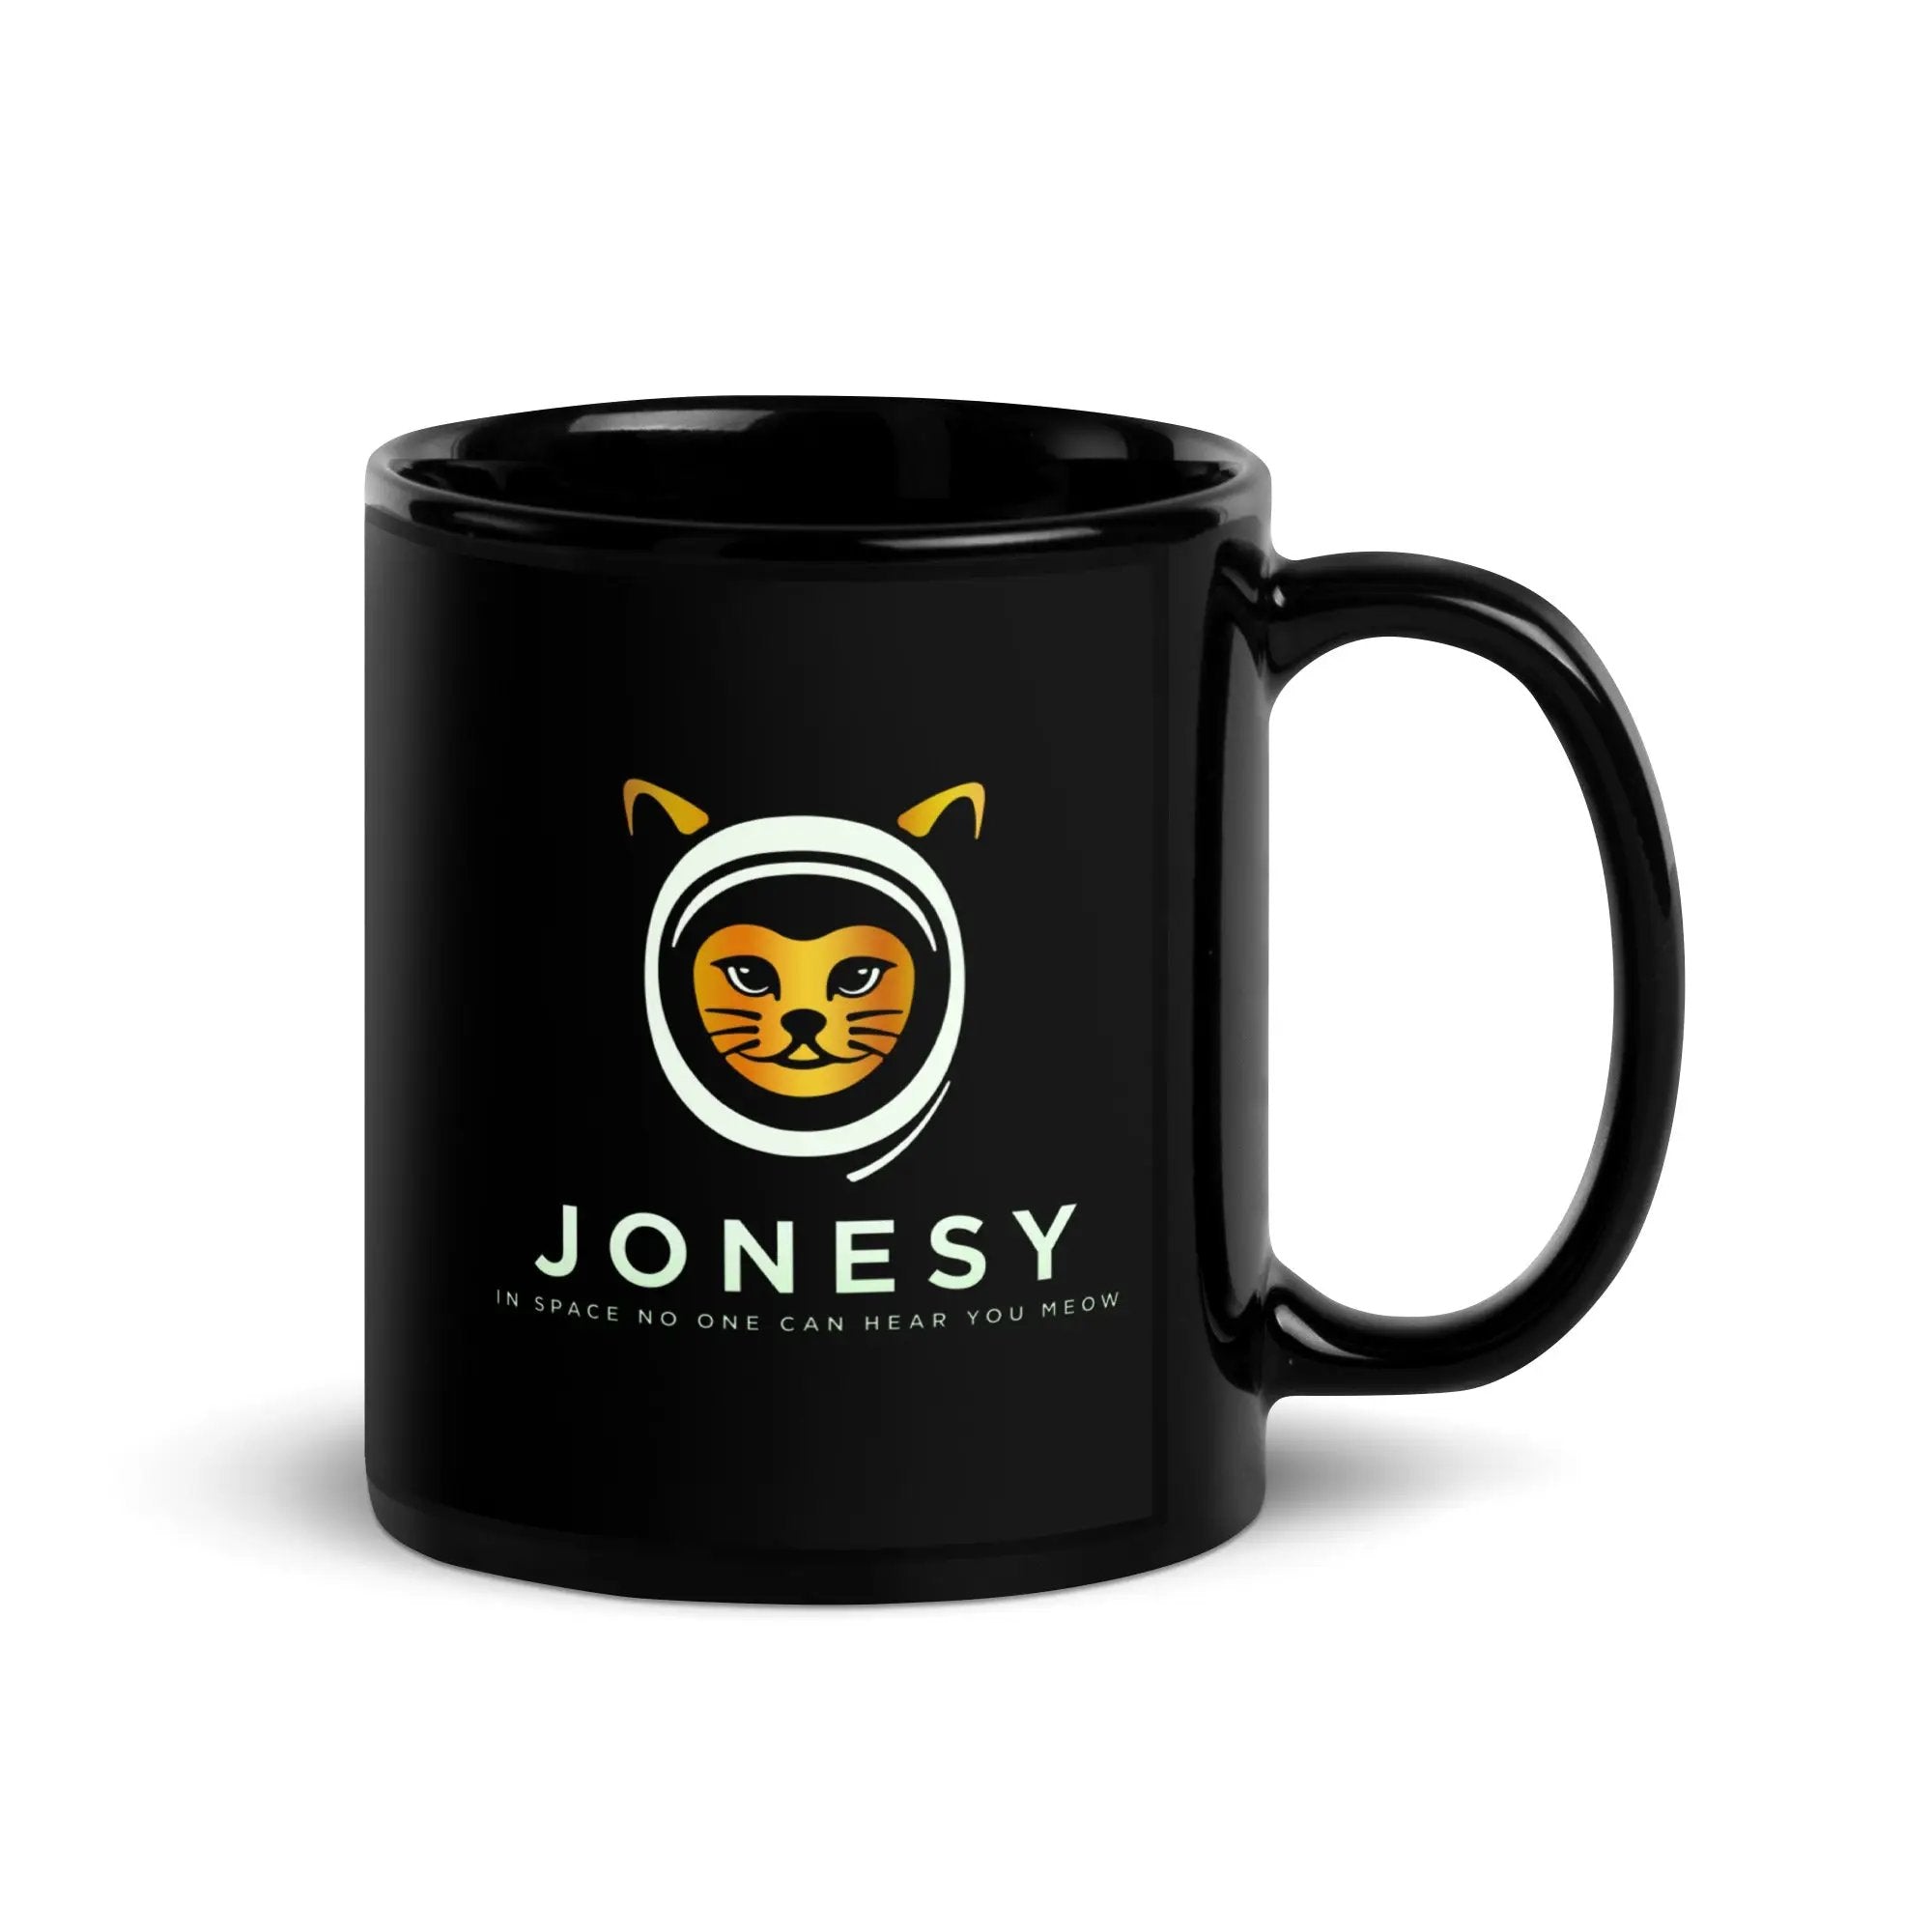 a black coffee mug with a cat on it